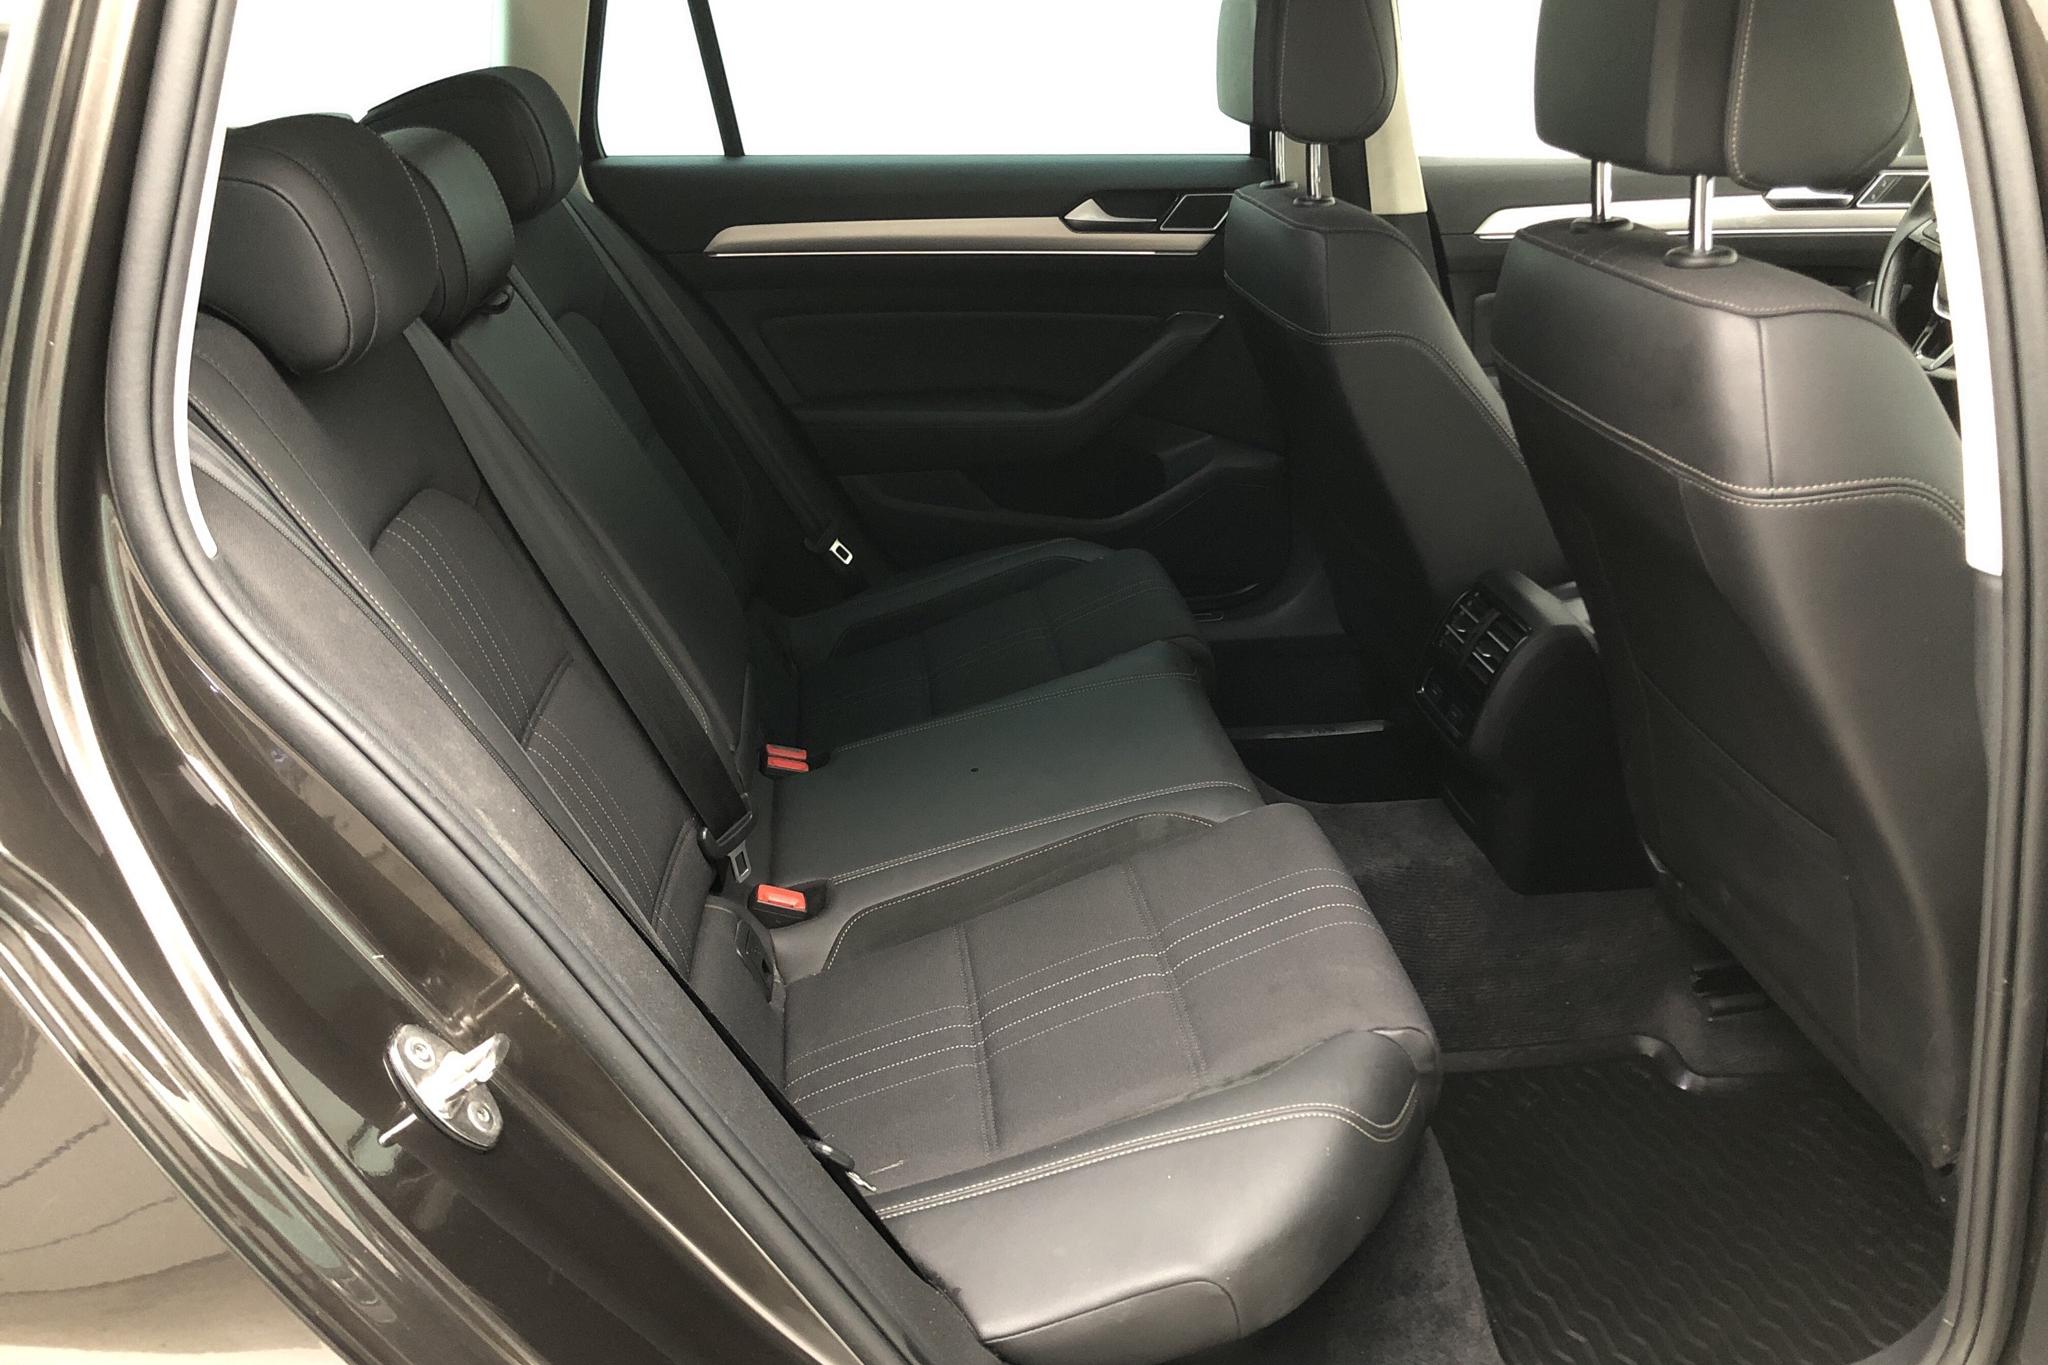 VW Passat Alltrack 2.0 TDI Sportscombi 4MOTION (190hk) - 203 360 km - Automatic - Dark Brown - 2017